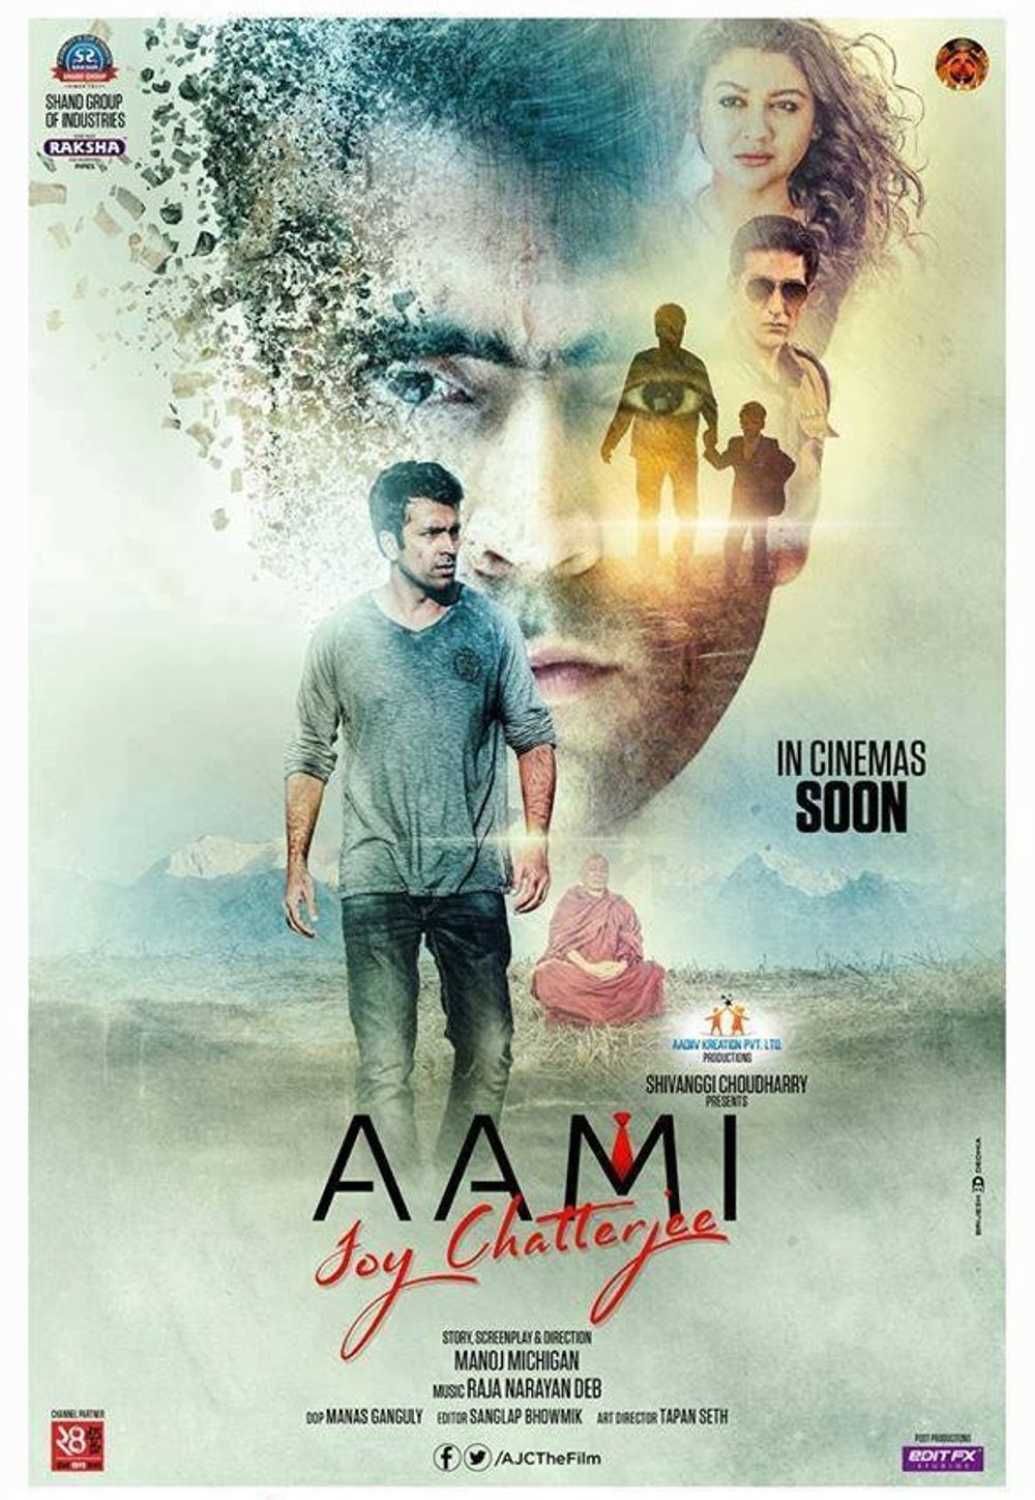 Aami Joy Chatterjee (2018) Bengali HDRip download full movie